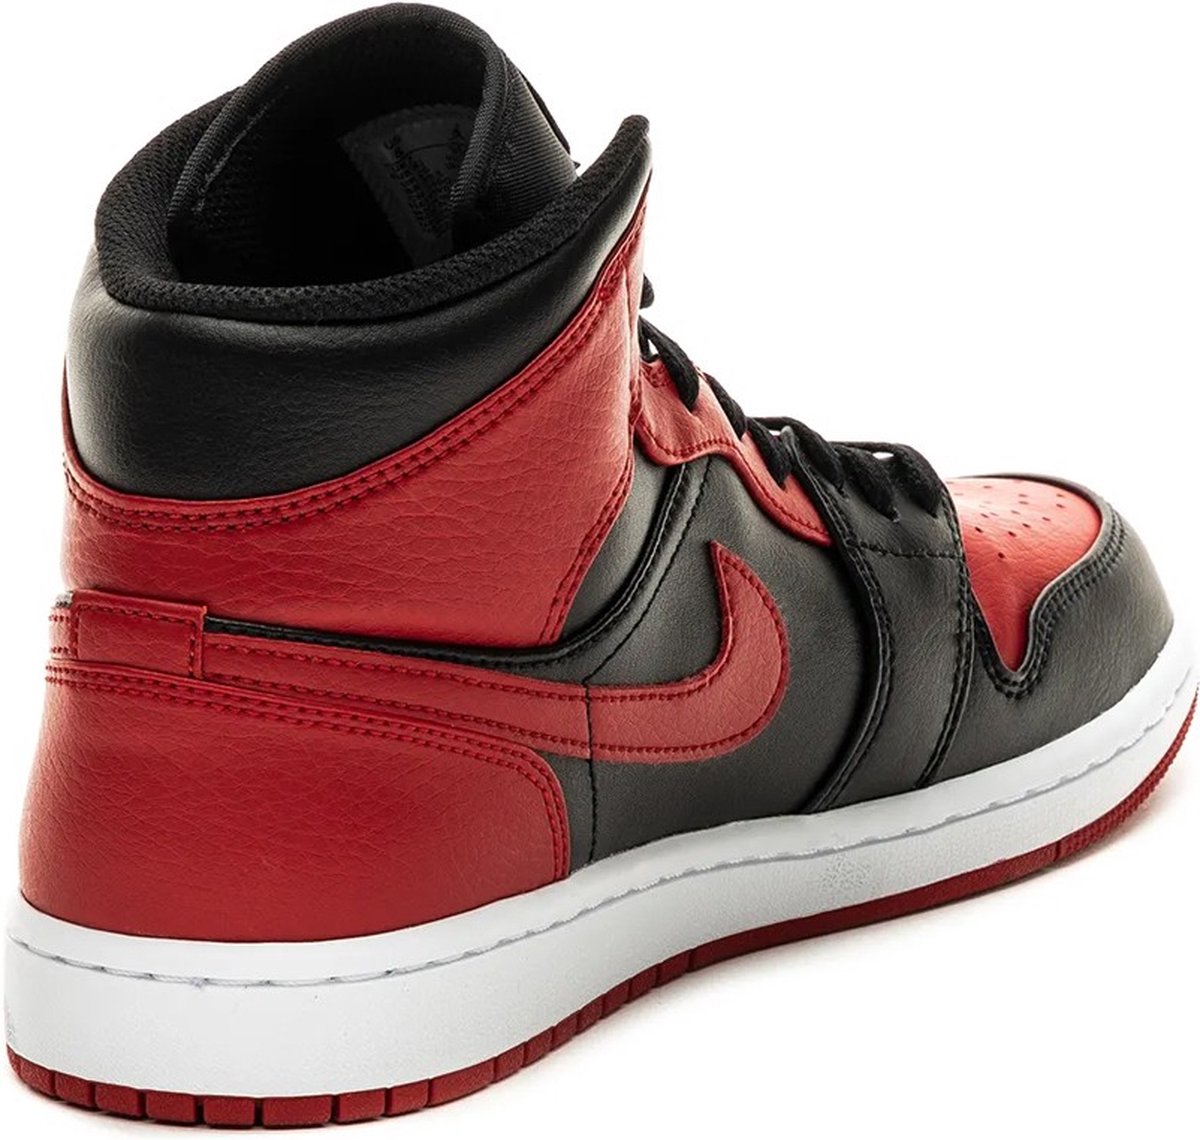 Nike Air Jordan 1 Mid, Noir/Gym Rouge White Banned, 554724 074, EUR 42.5 |  bol